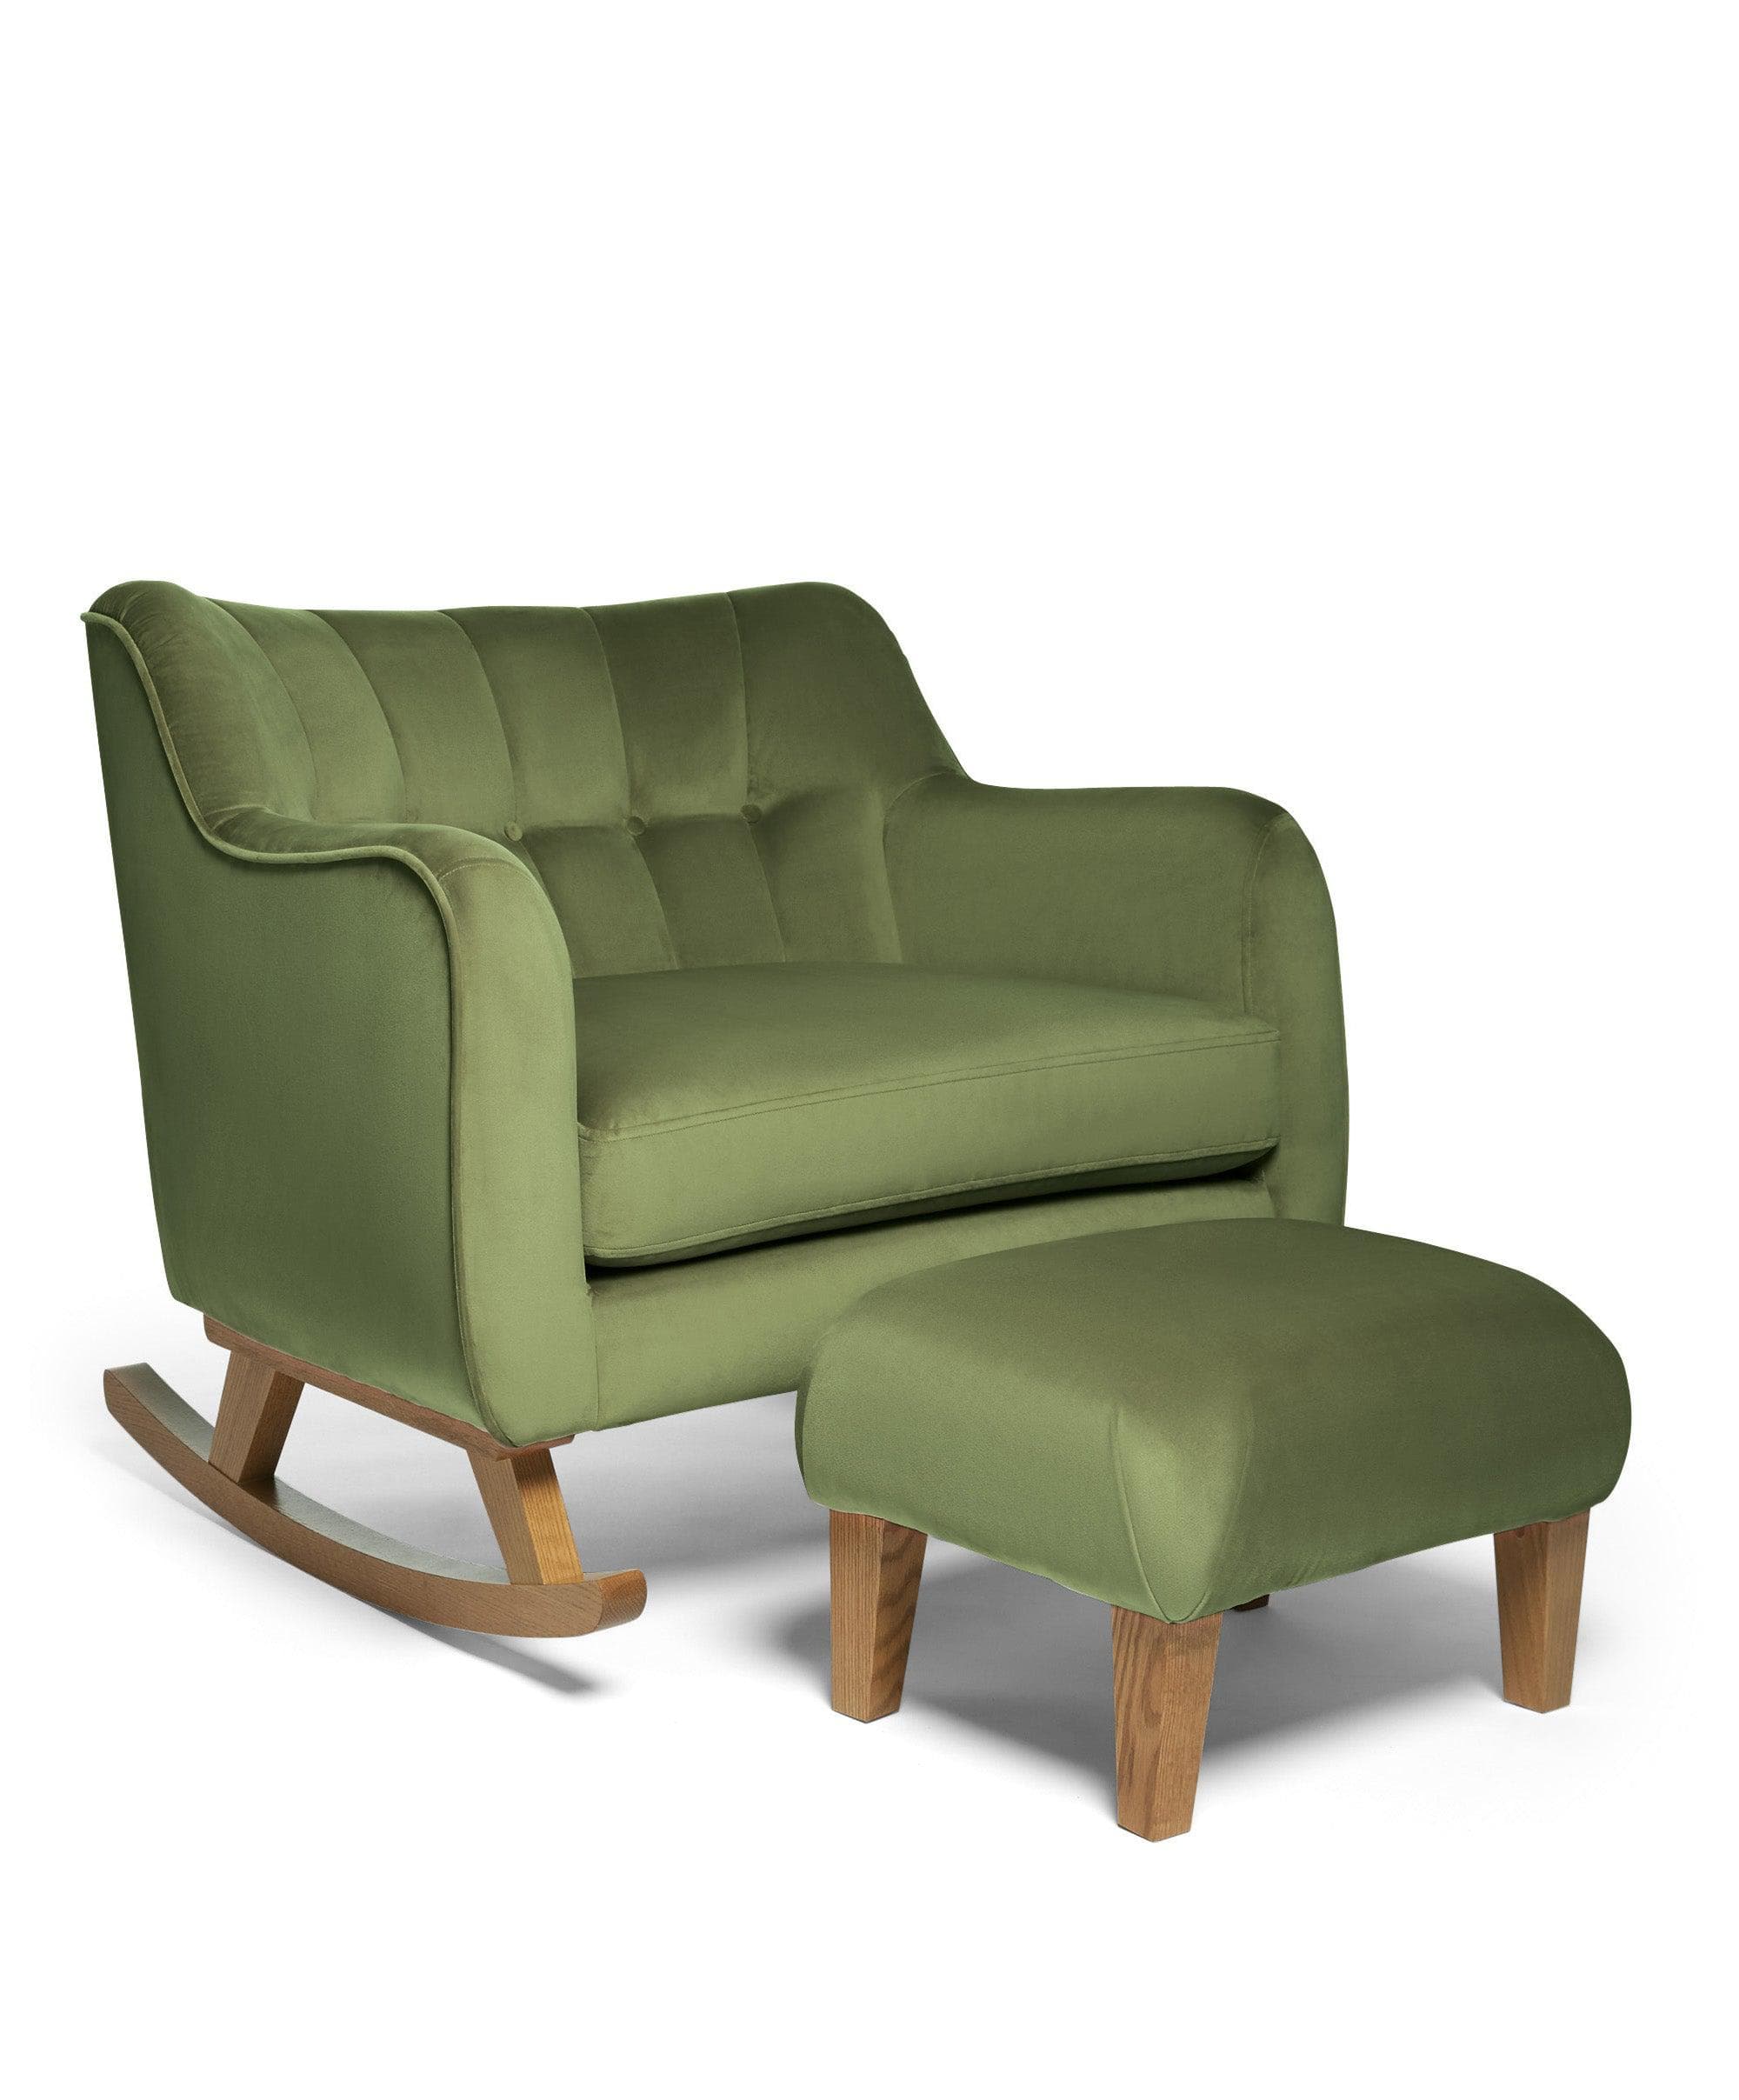 Hilston Cuddle Chair Set in Velvet - Olive